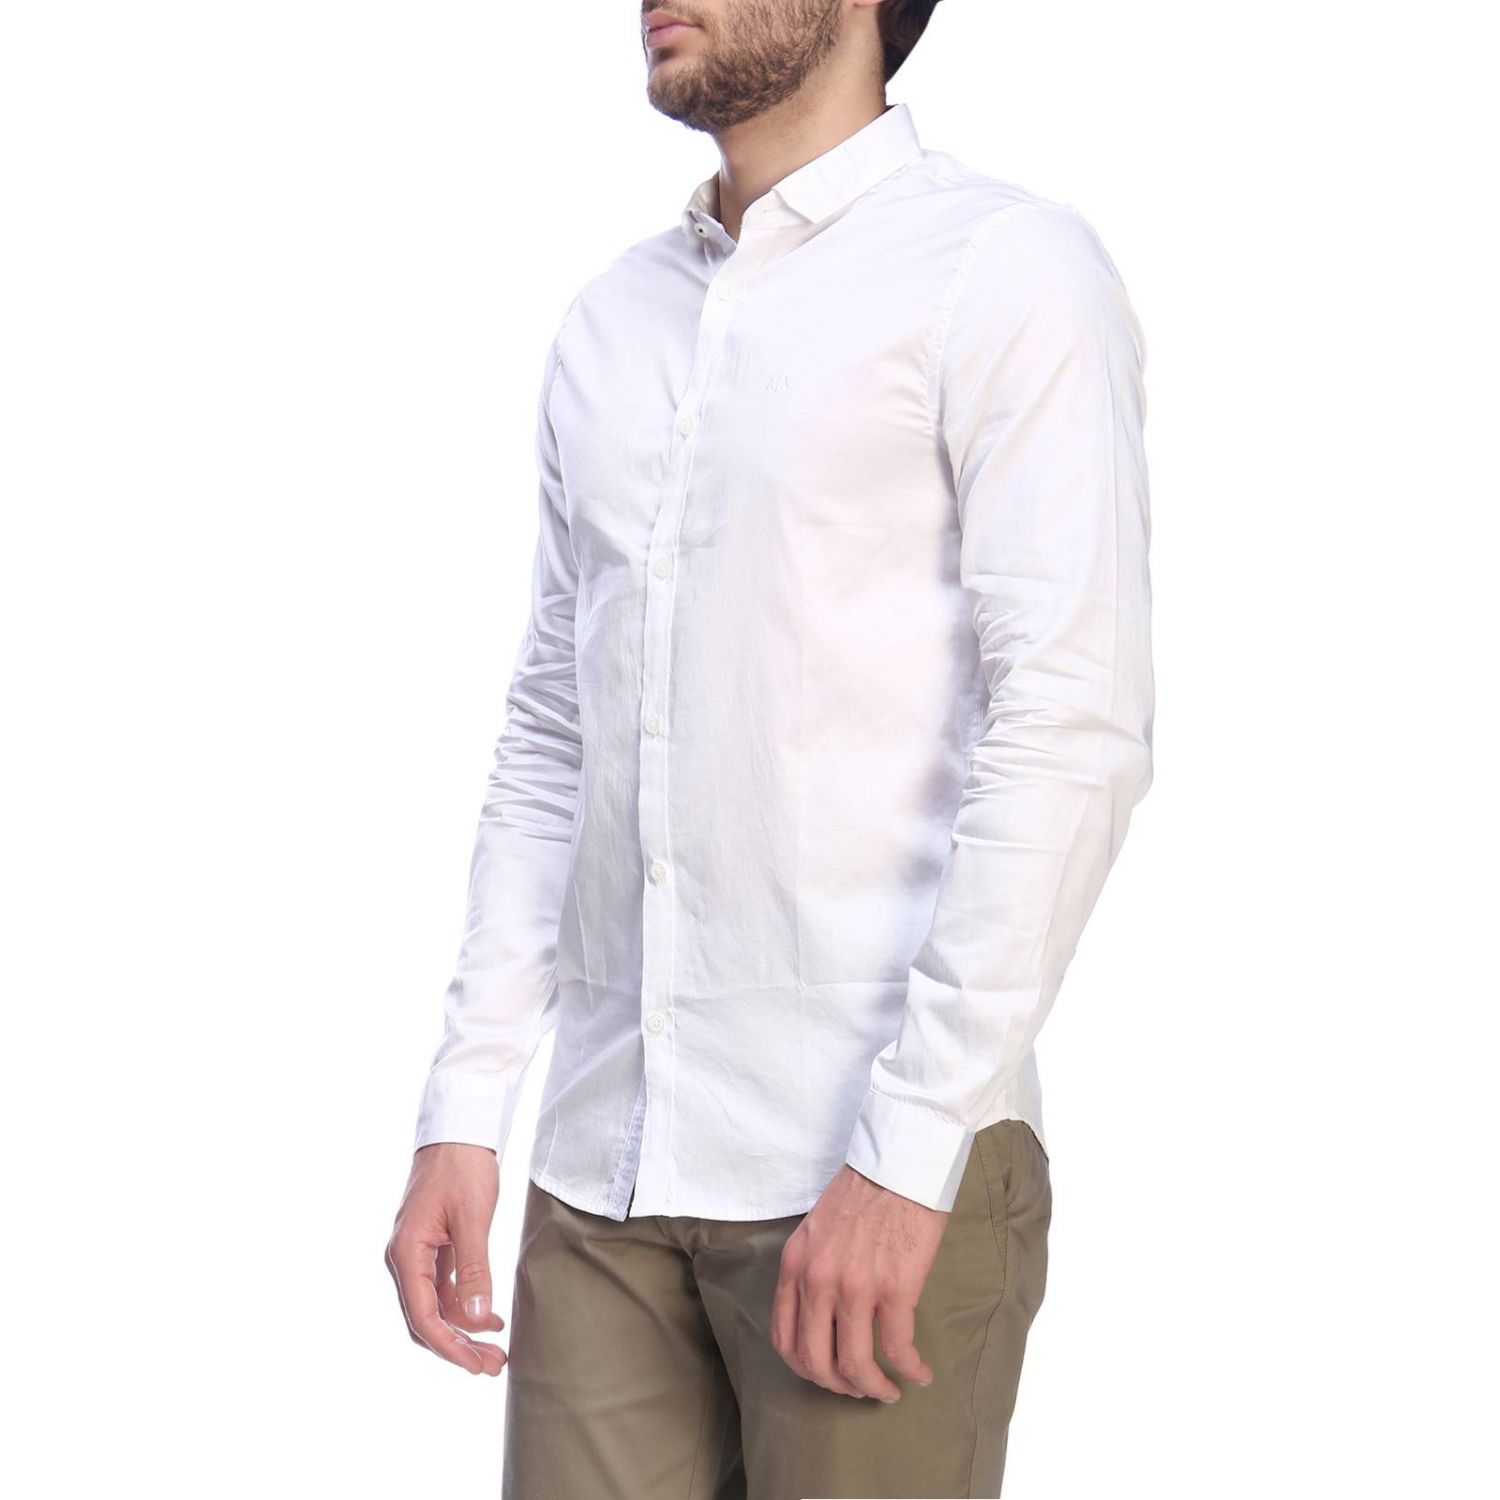 Armani Exchange Outlet: Shirt men - White | Shirt Armani Exchange ...